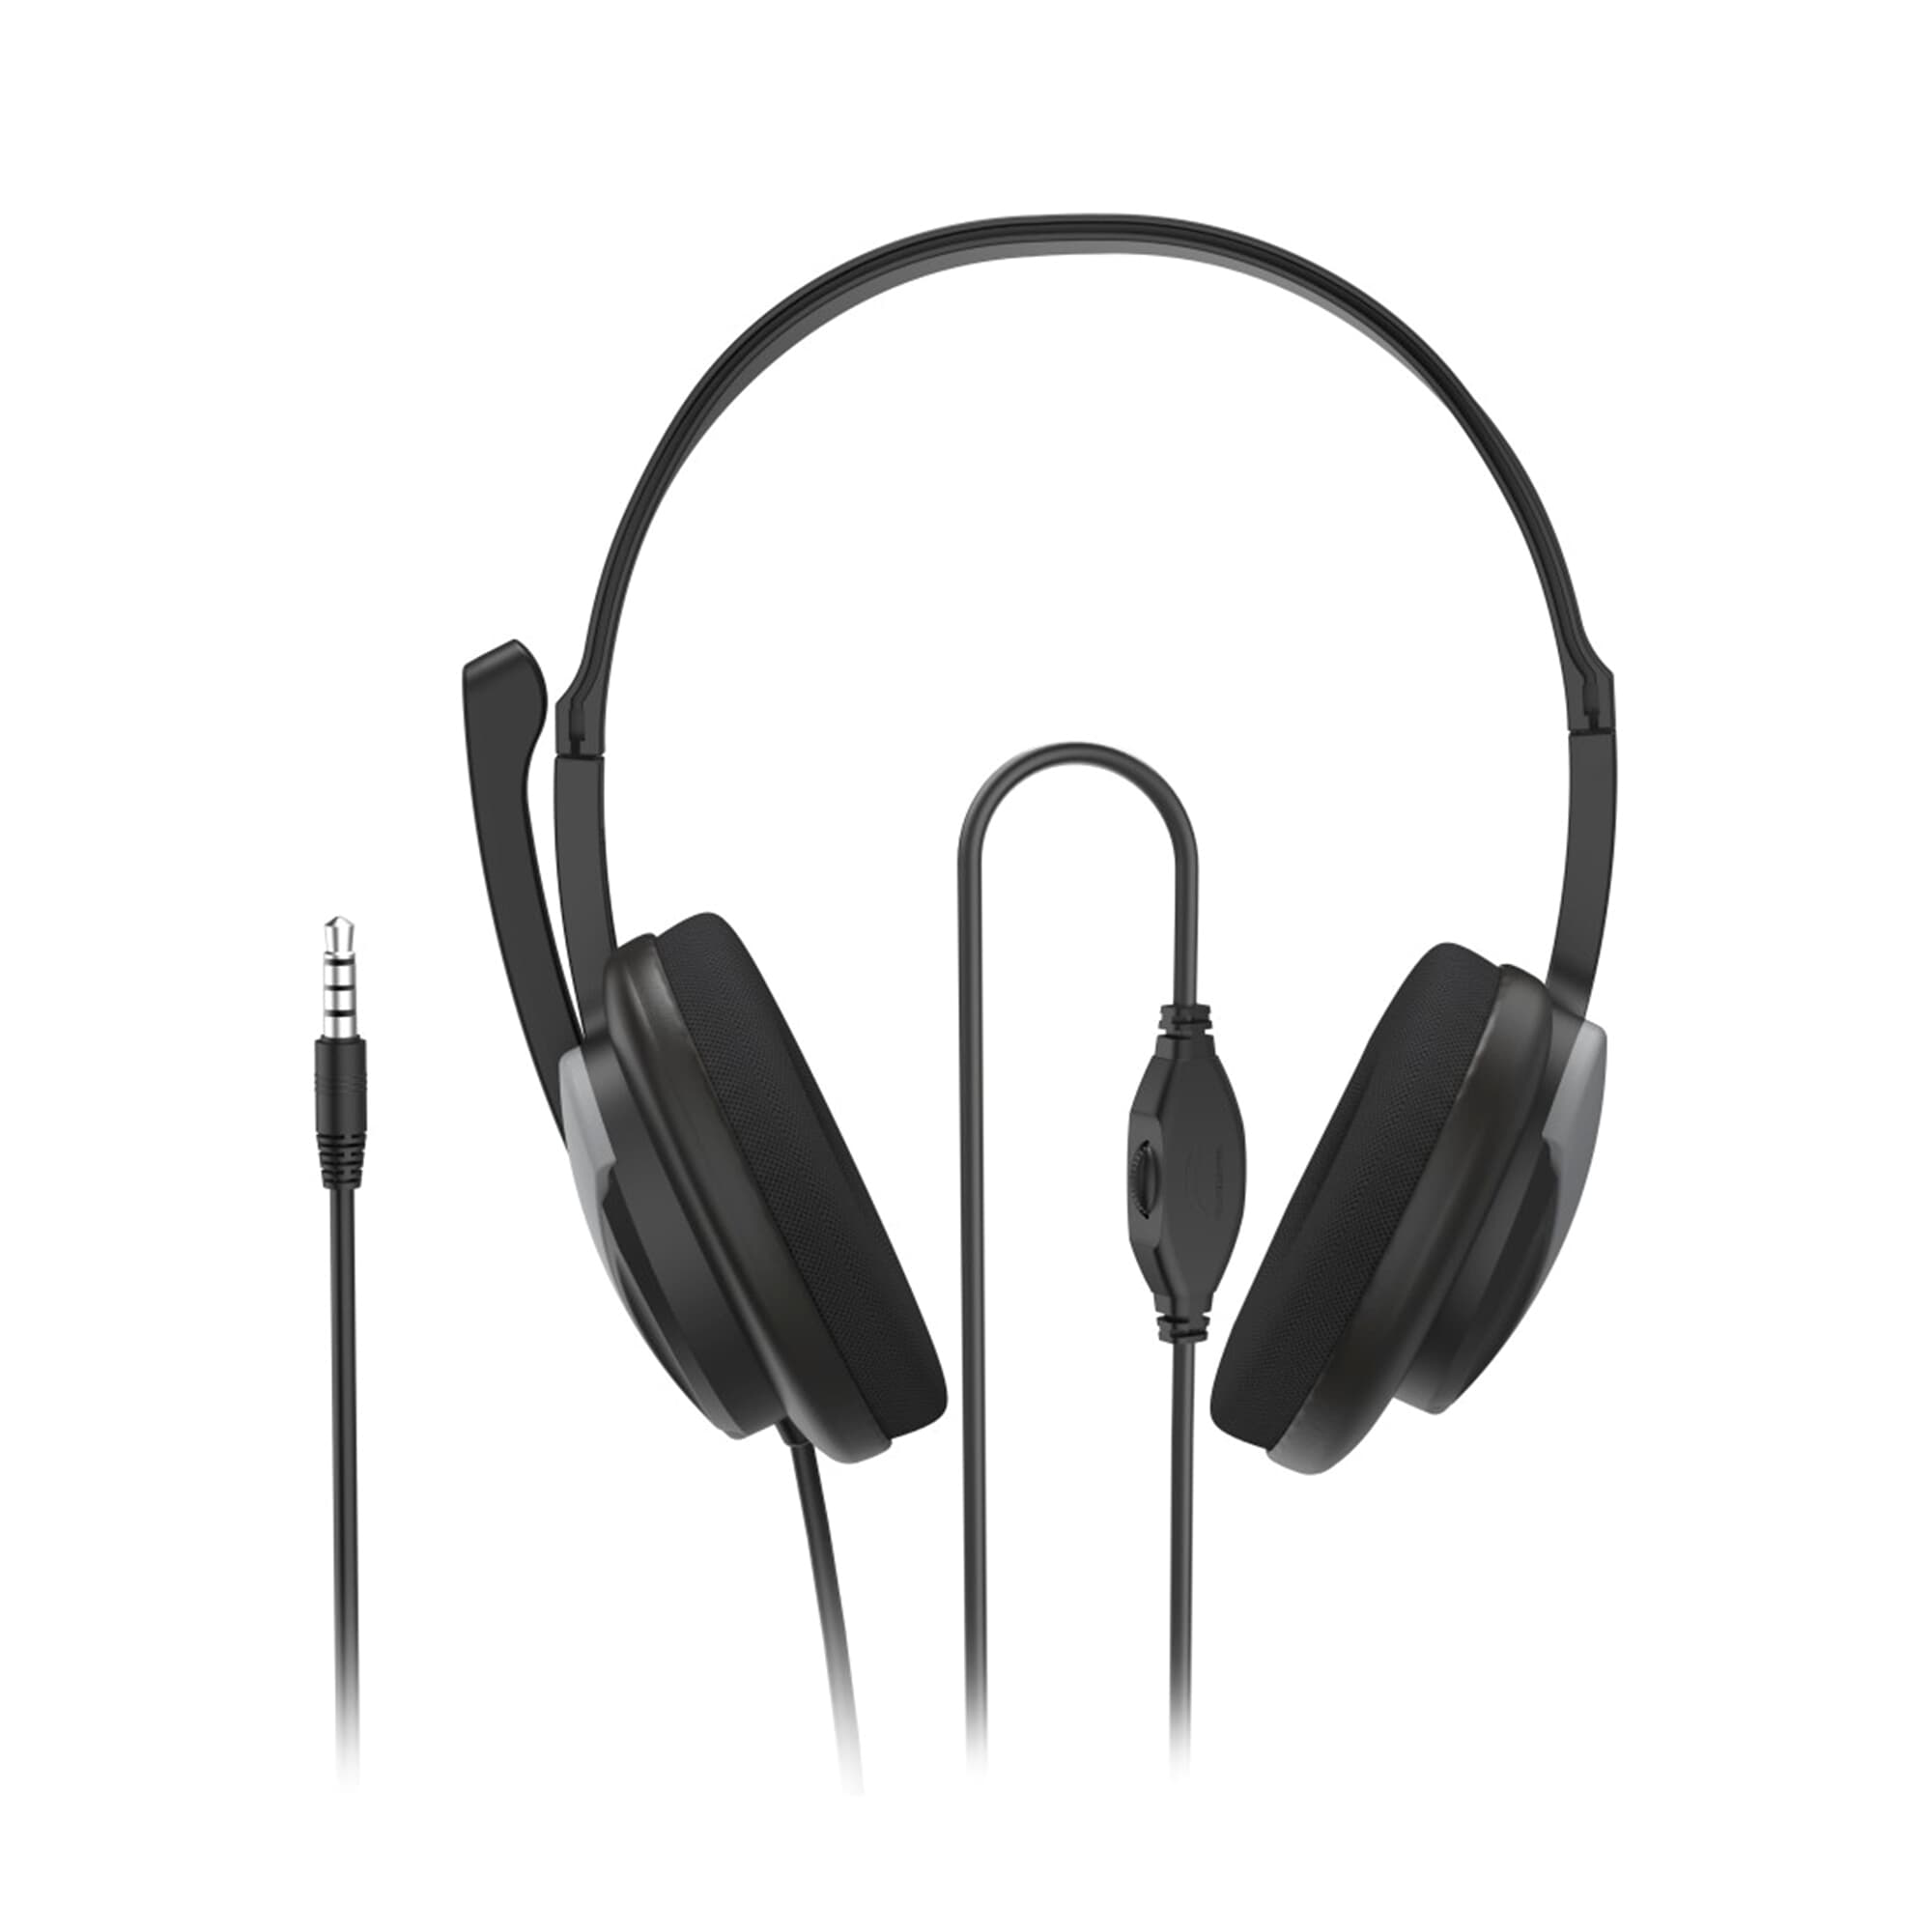 Schwarz/Silber HS-P100 Headset V2, HAMA On-ear